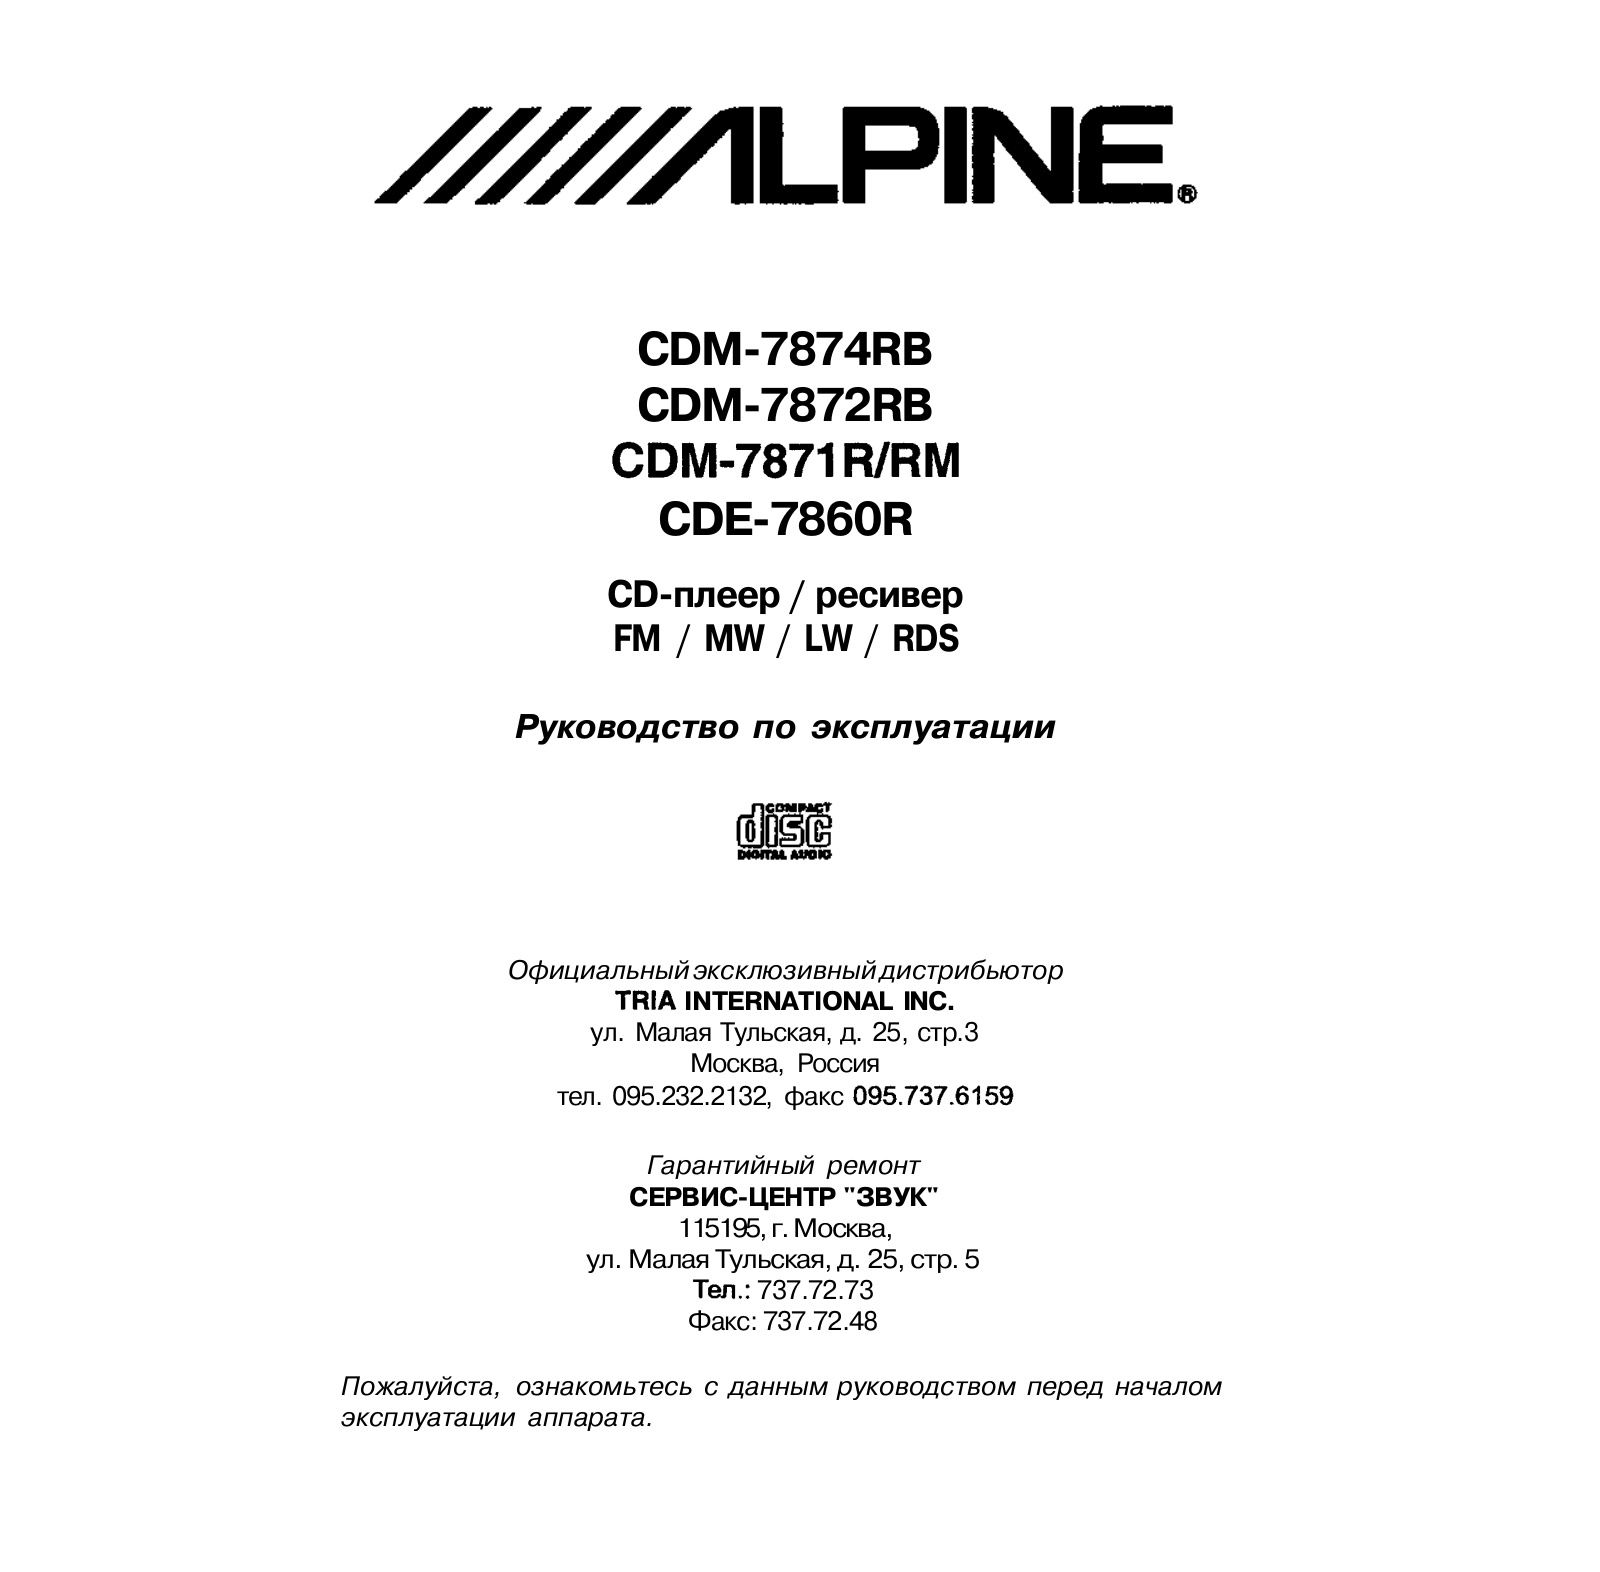 ALPINE CDM-7872RB, CDM-7874RB, CDM-7871RM, CDM-7871R User Manual